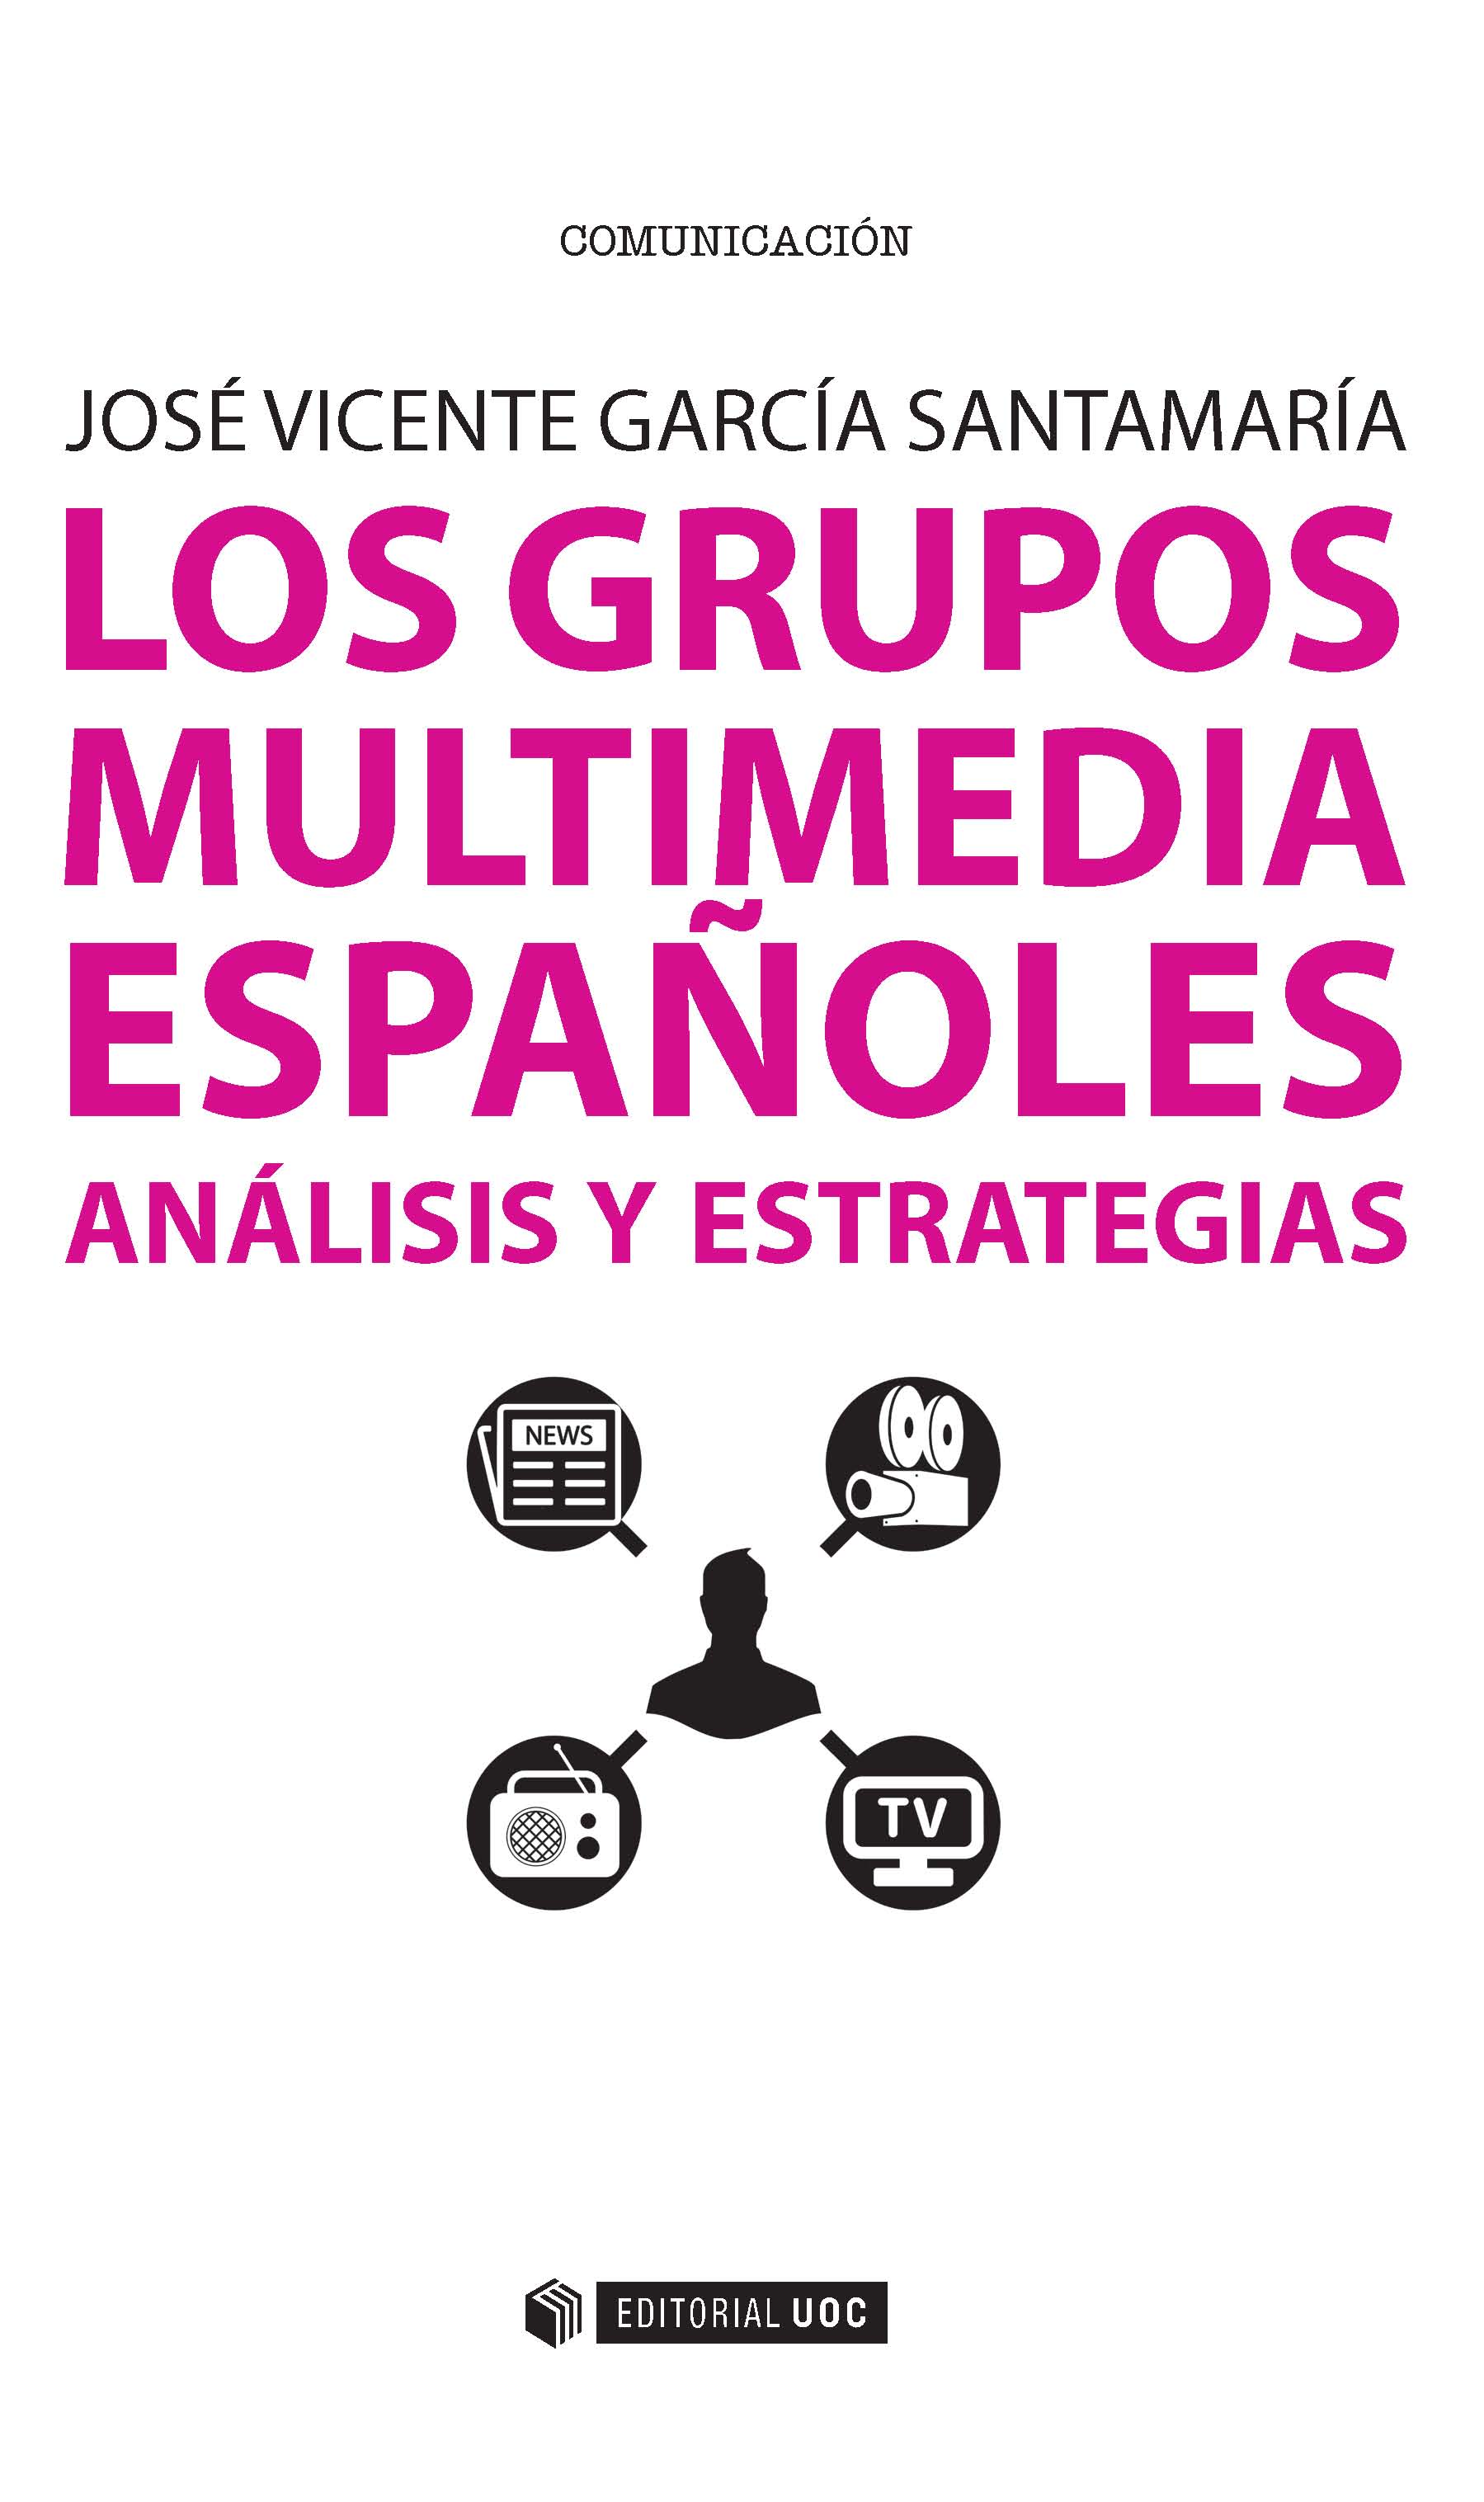 Los grupos multimedia espaÃ±oles